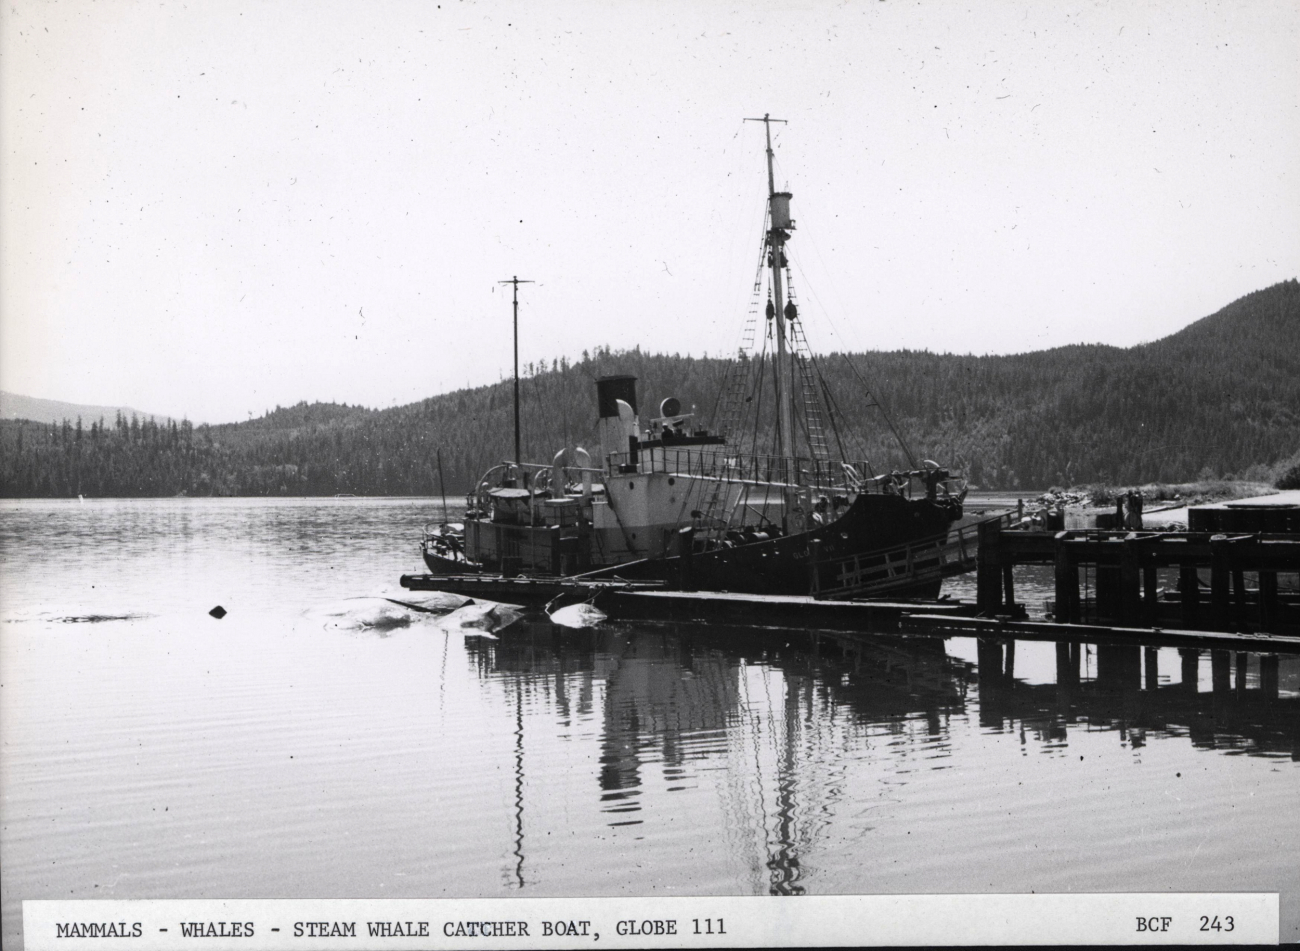 Steam whale catcher GLOBE III at Coal Harbor, British Columbia